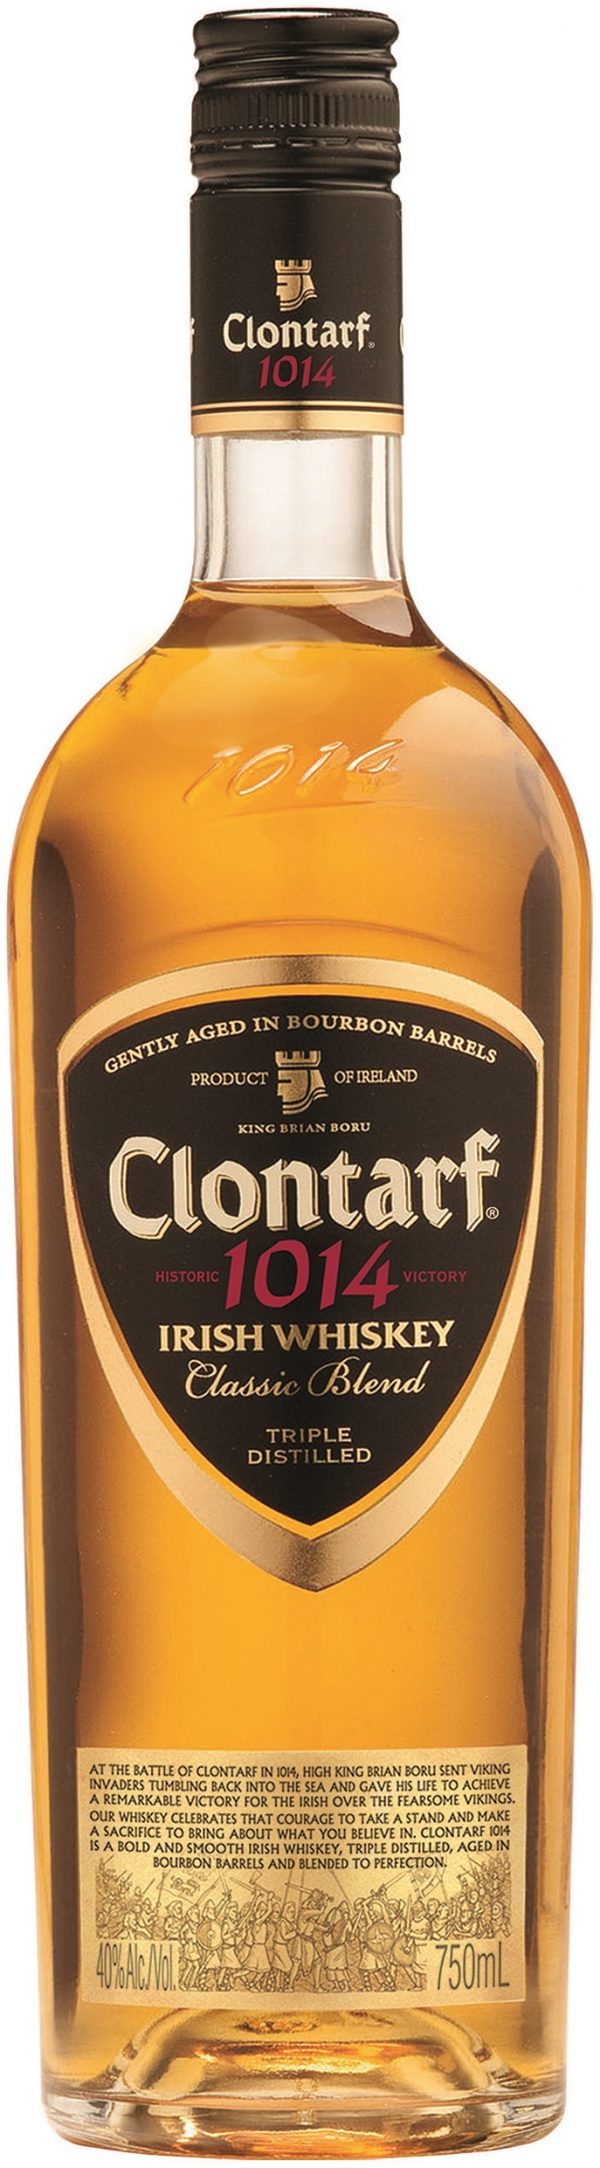 Zoom to enlarge the Clontarf 1014 Black Label Classic Blend Irish Whiskey